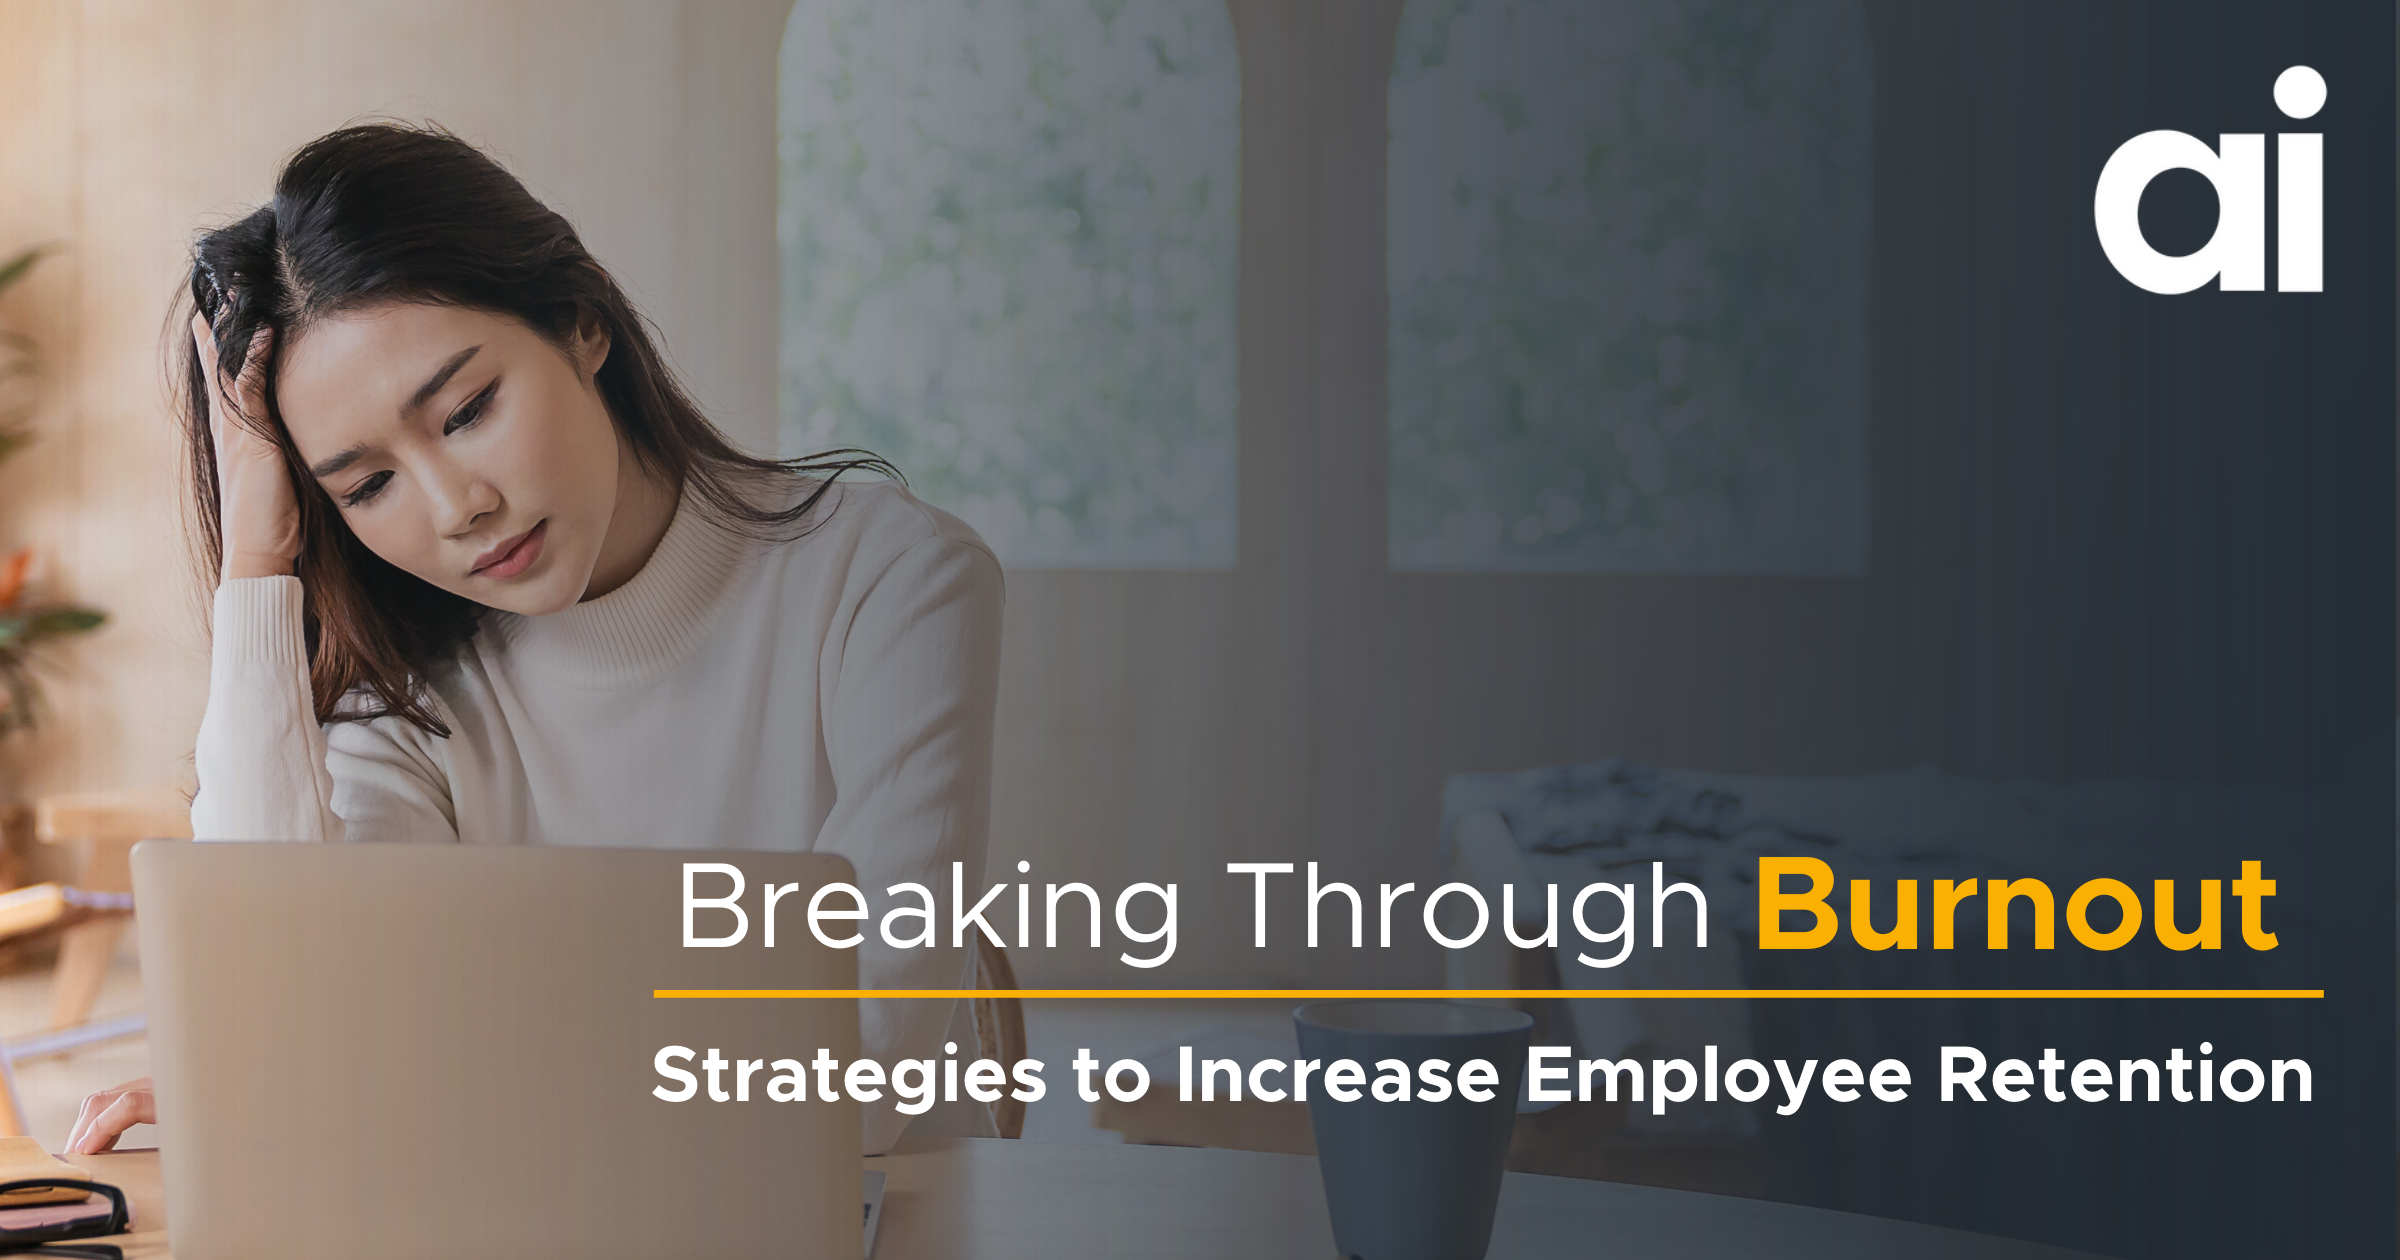 Breaking Through Burnout: Strategies to Increase Employee Retention